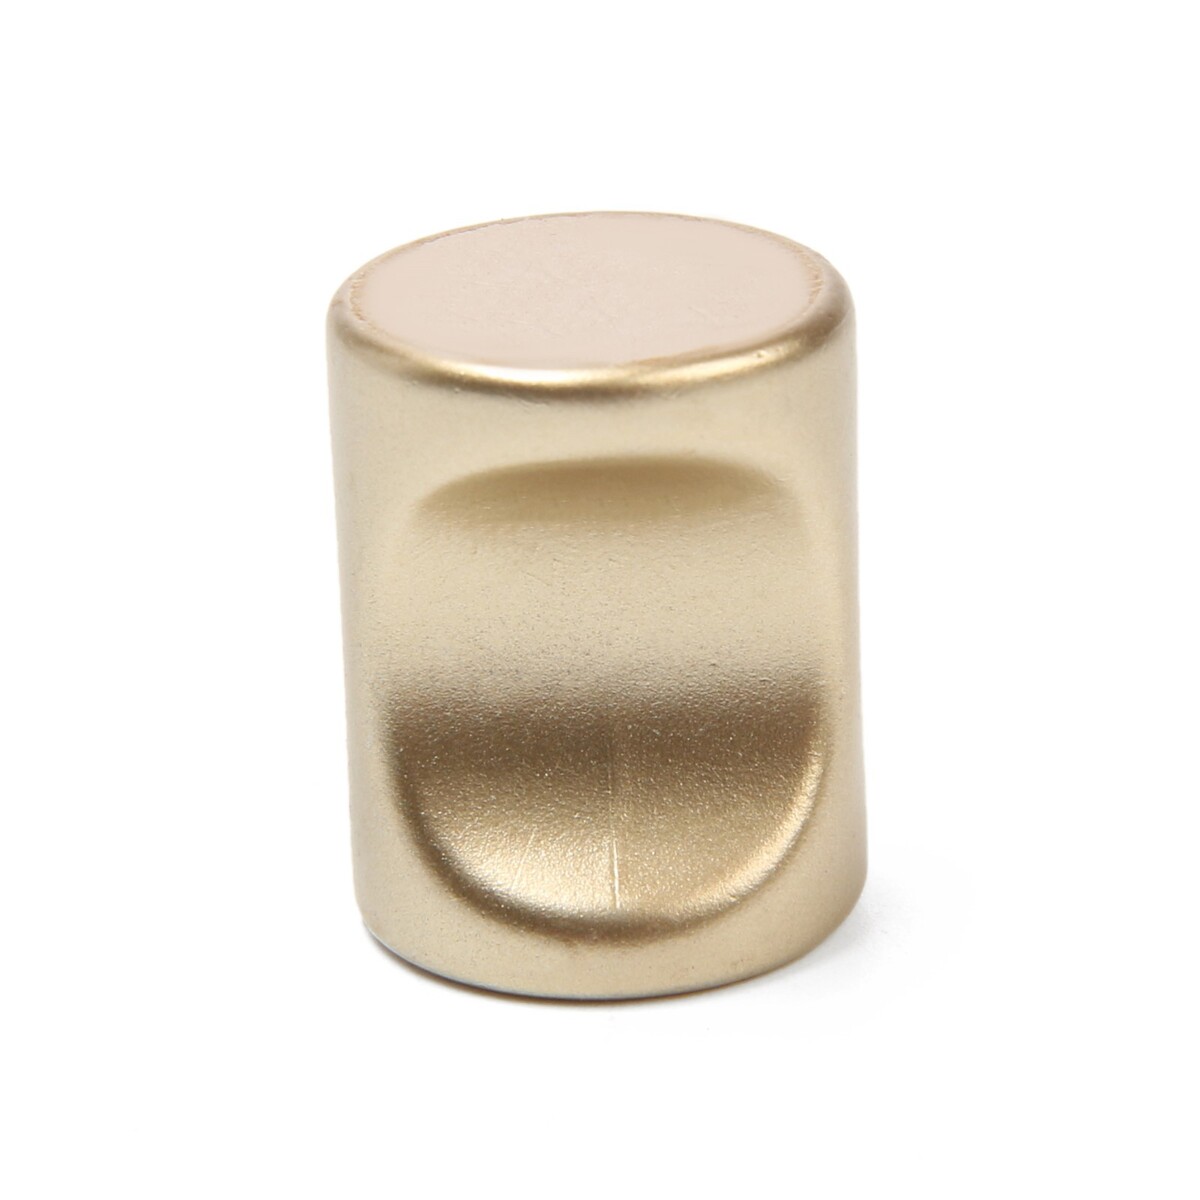 Ручка-кнопка cappio, рк102, d=18 мм, пластик, цвет матовое золото ручка cappio м о 96 мм с узором матовое золото